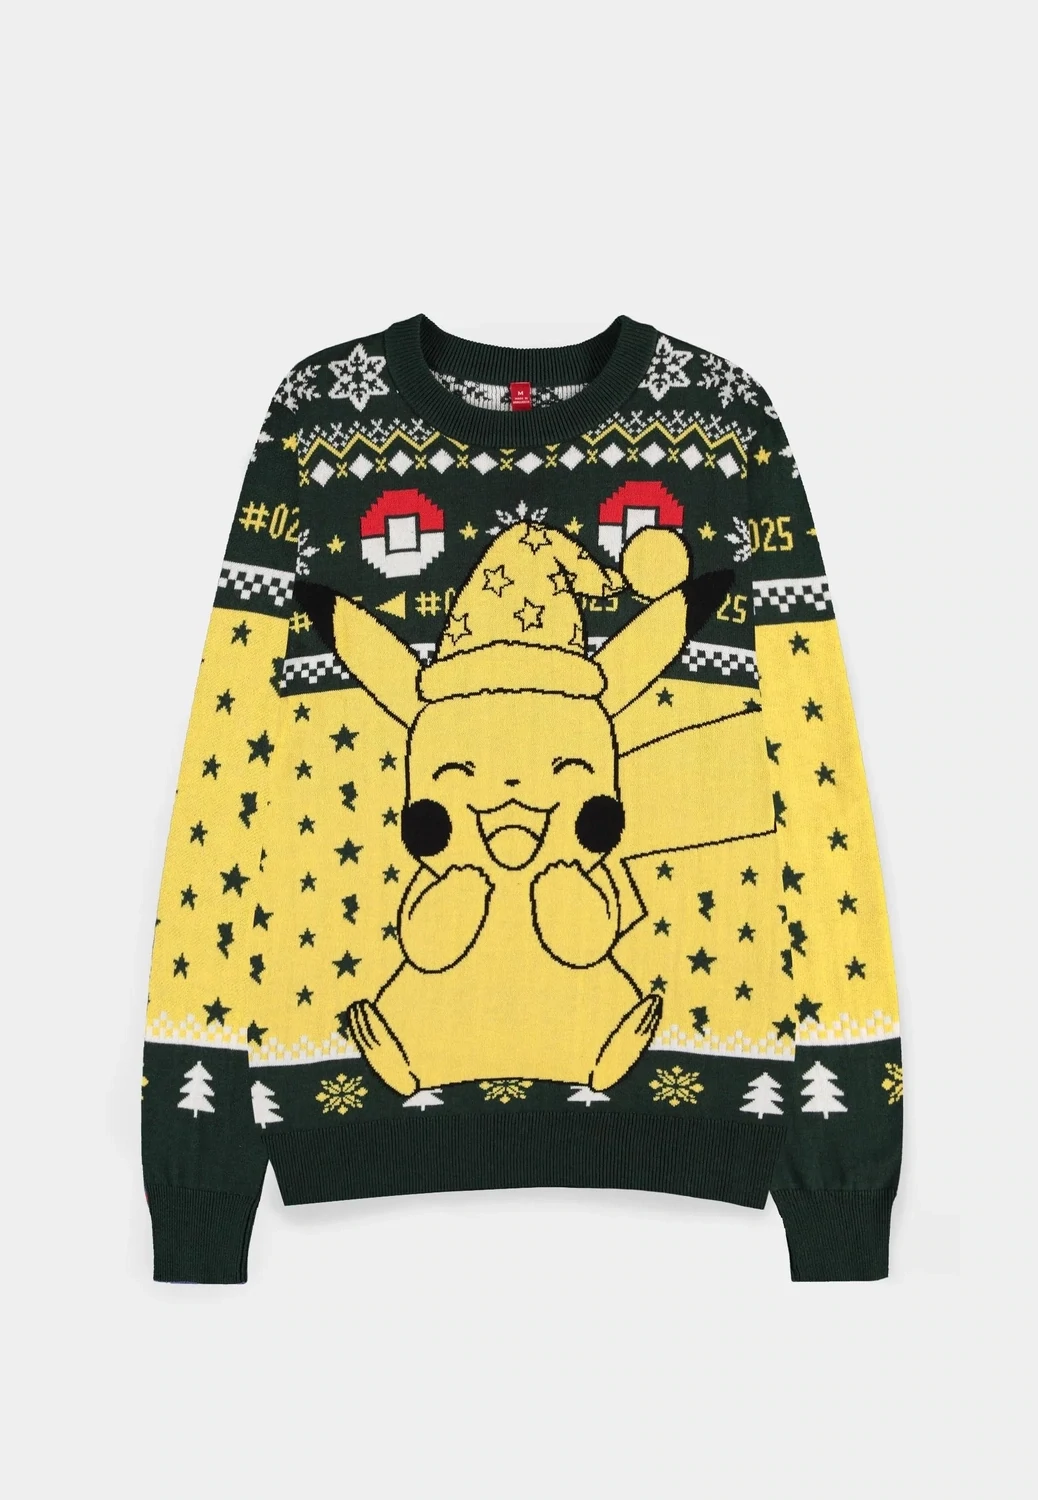 Pokémon - Pikachu Christmas Jumper, Grösse: XS